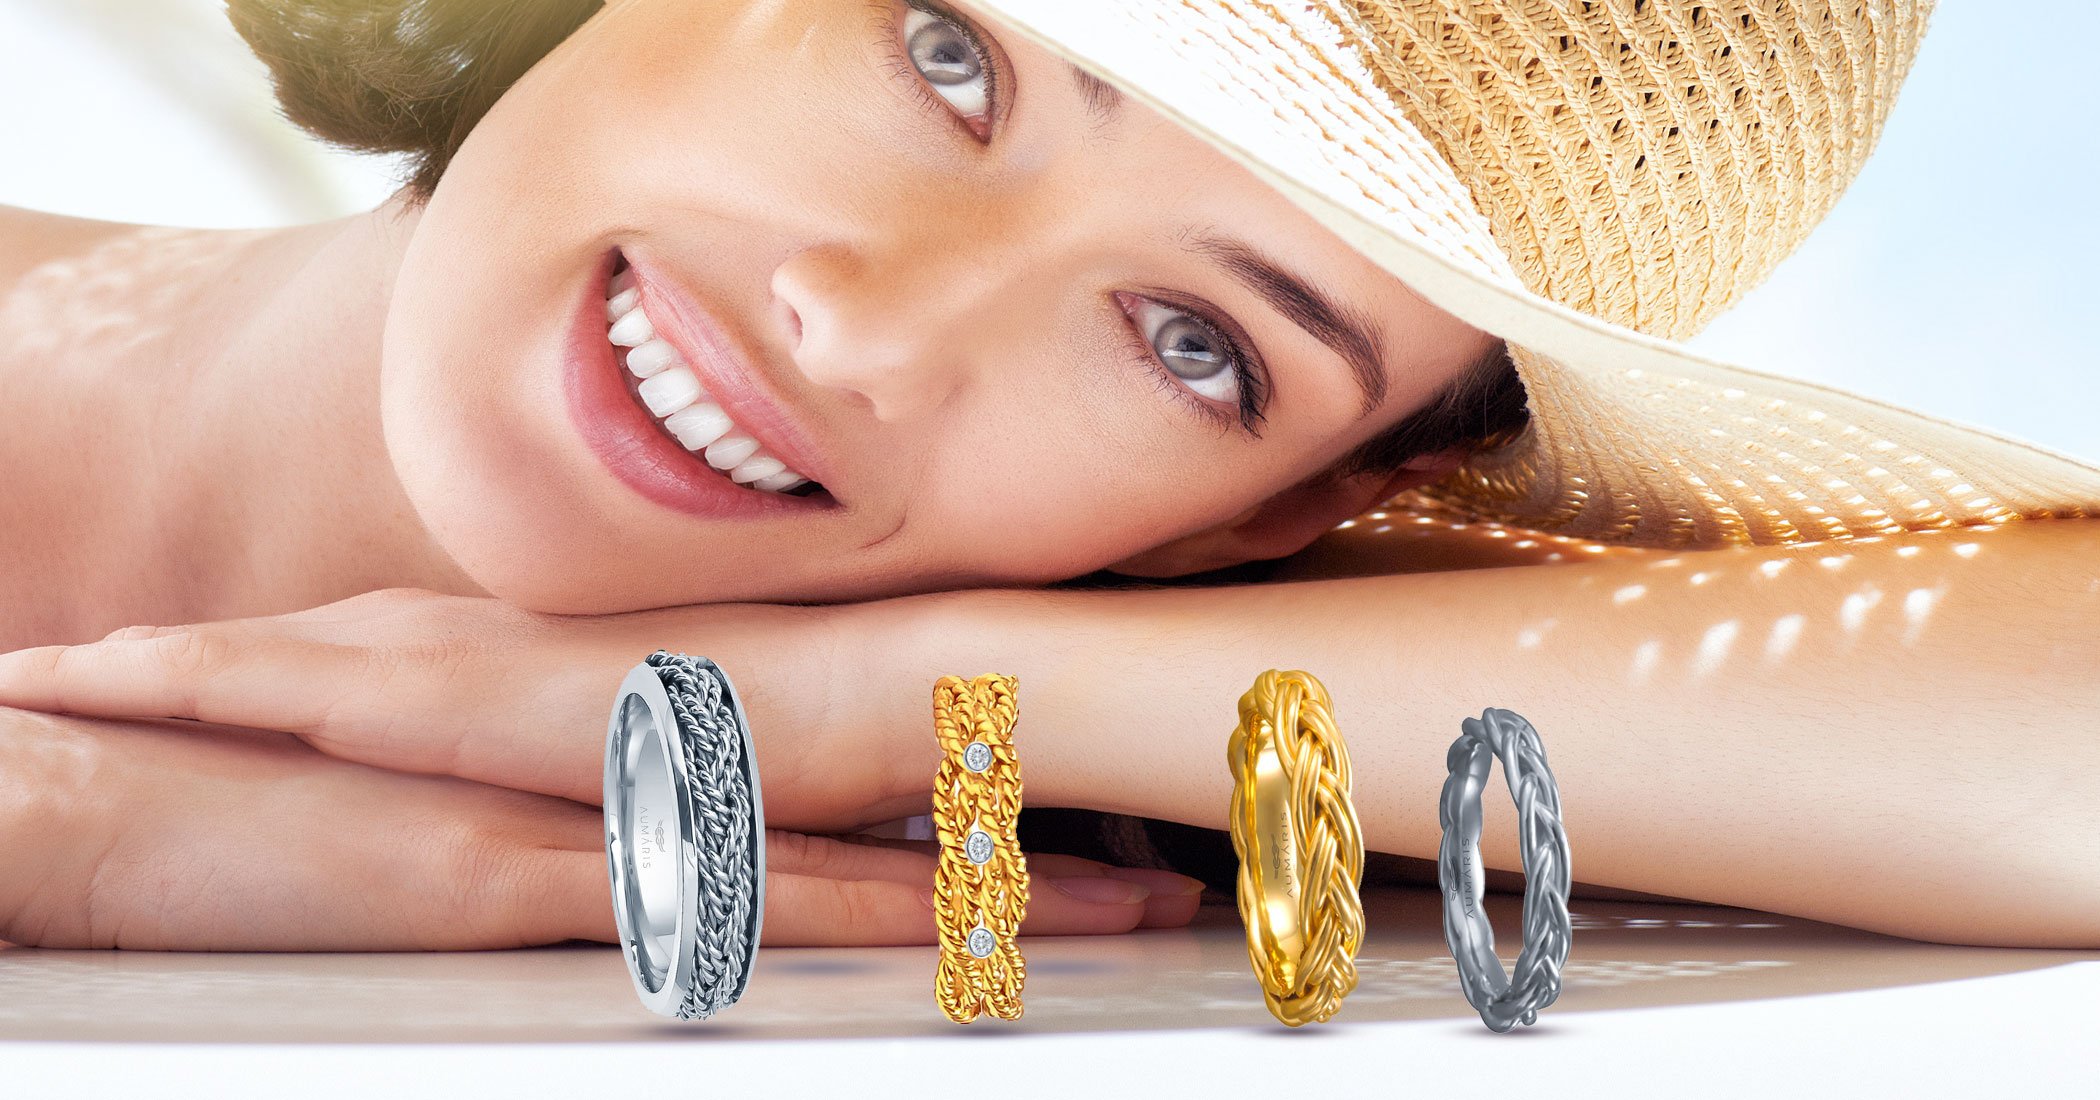 Nautical Charm Bracelet Gold - Nautical Gold Bracelets - Aumaris Nautical Jewelry 